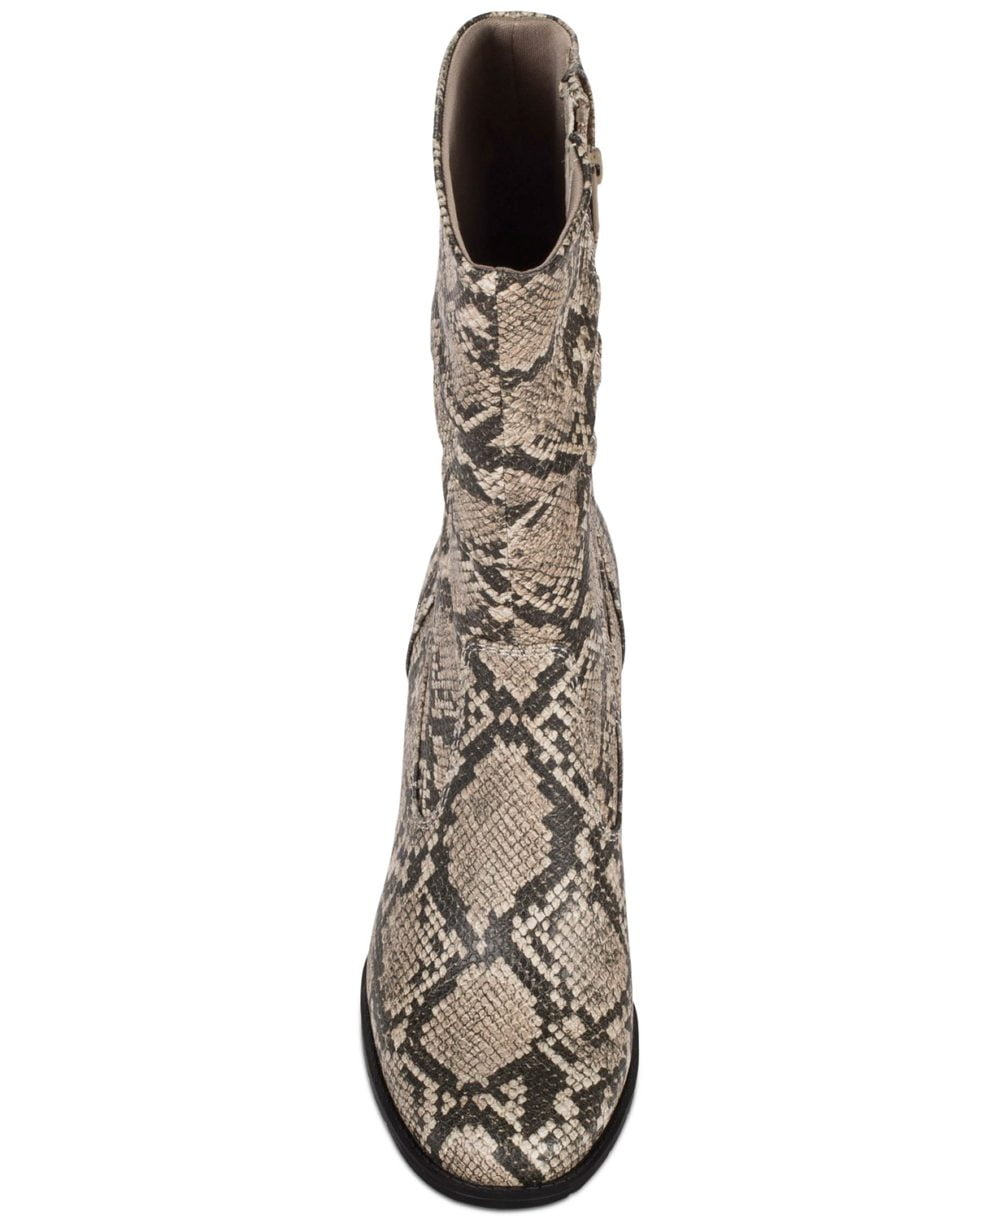 www.couturepoint.com-baretraps-womens-beige-python-print-lovelace-mid-shaft-boots